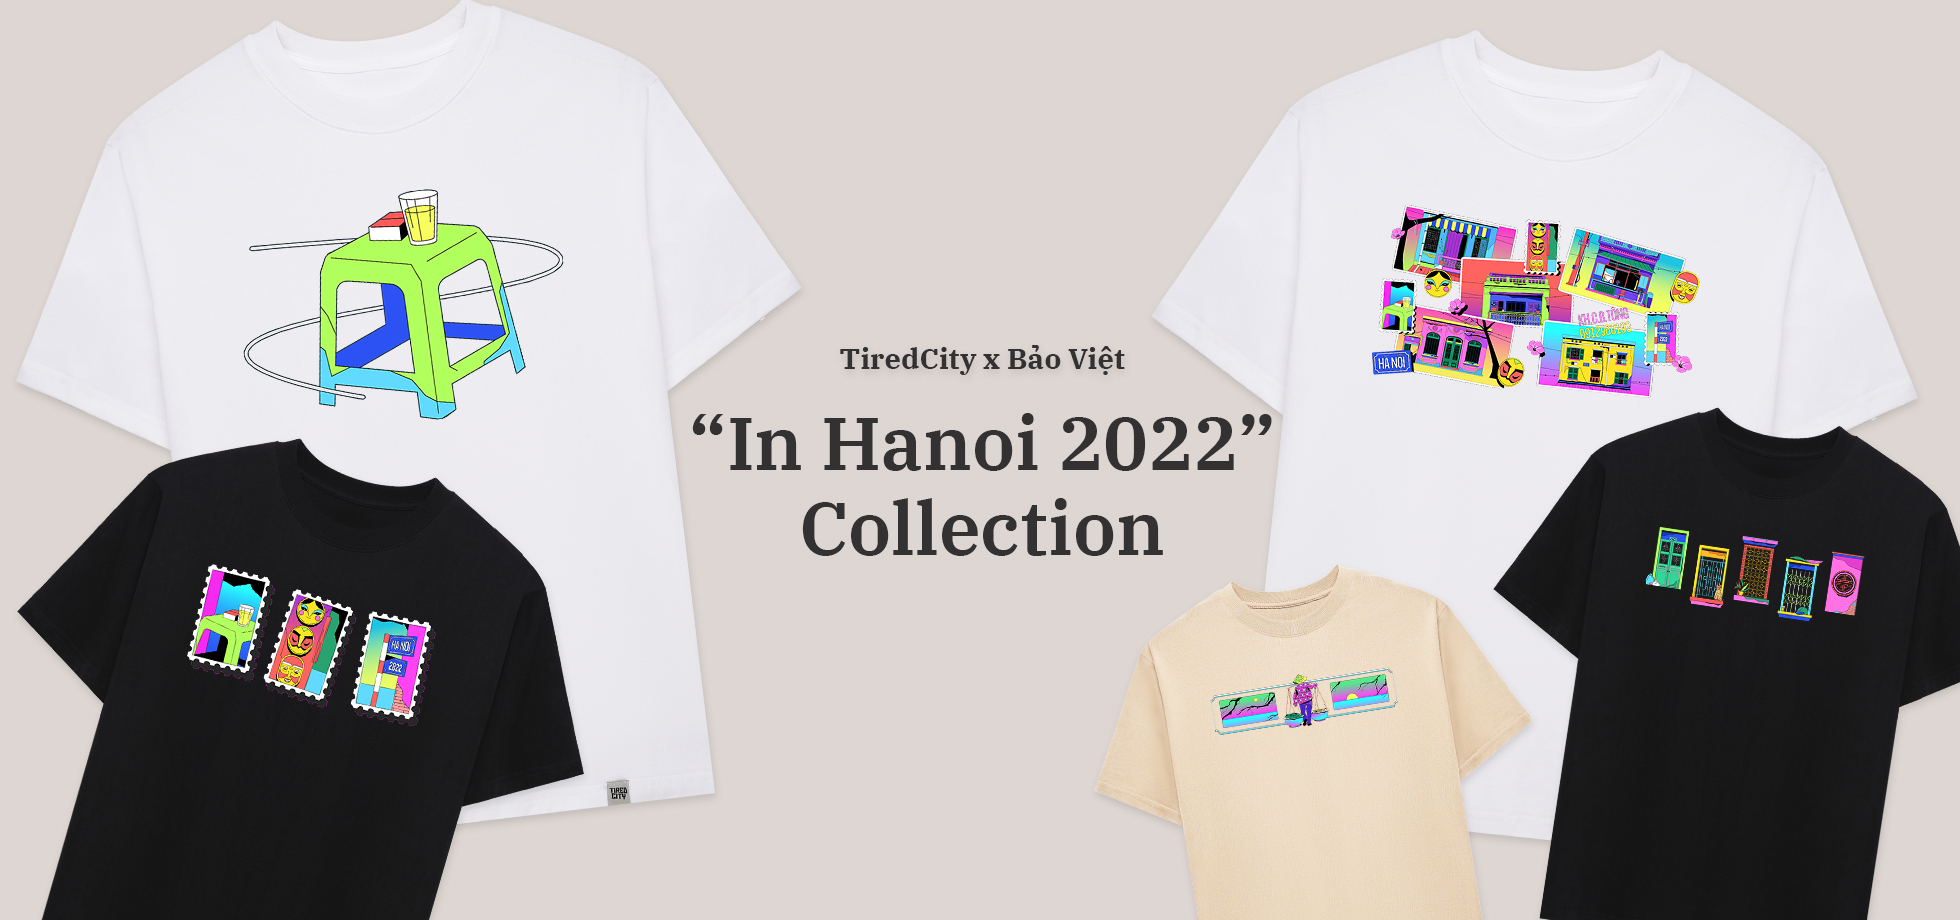 In Hanoi 2022